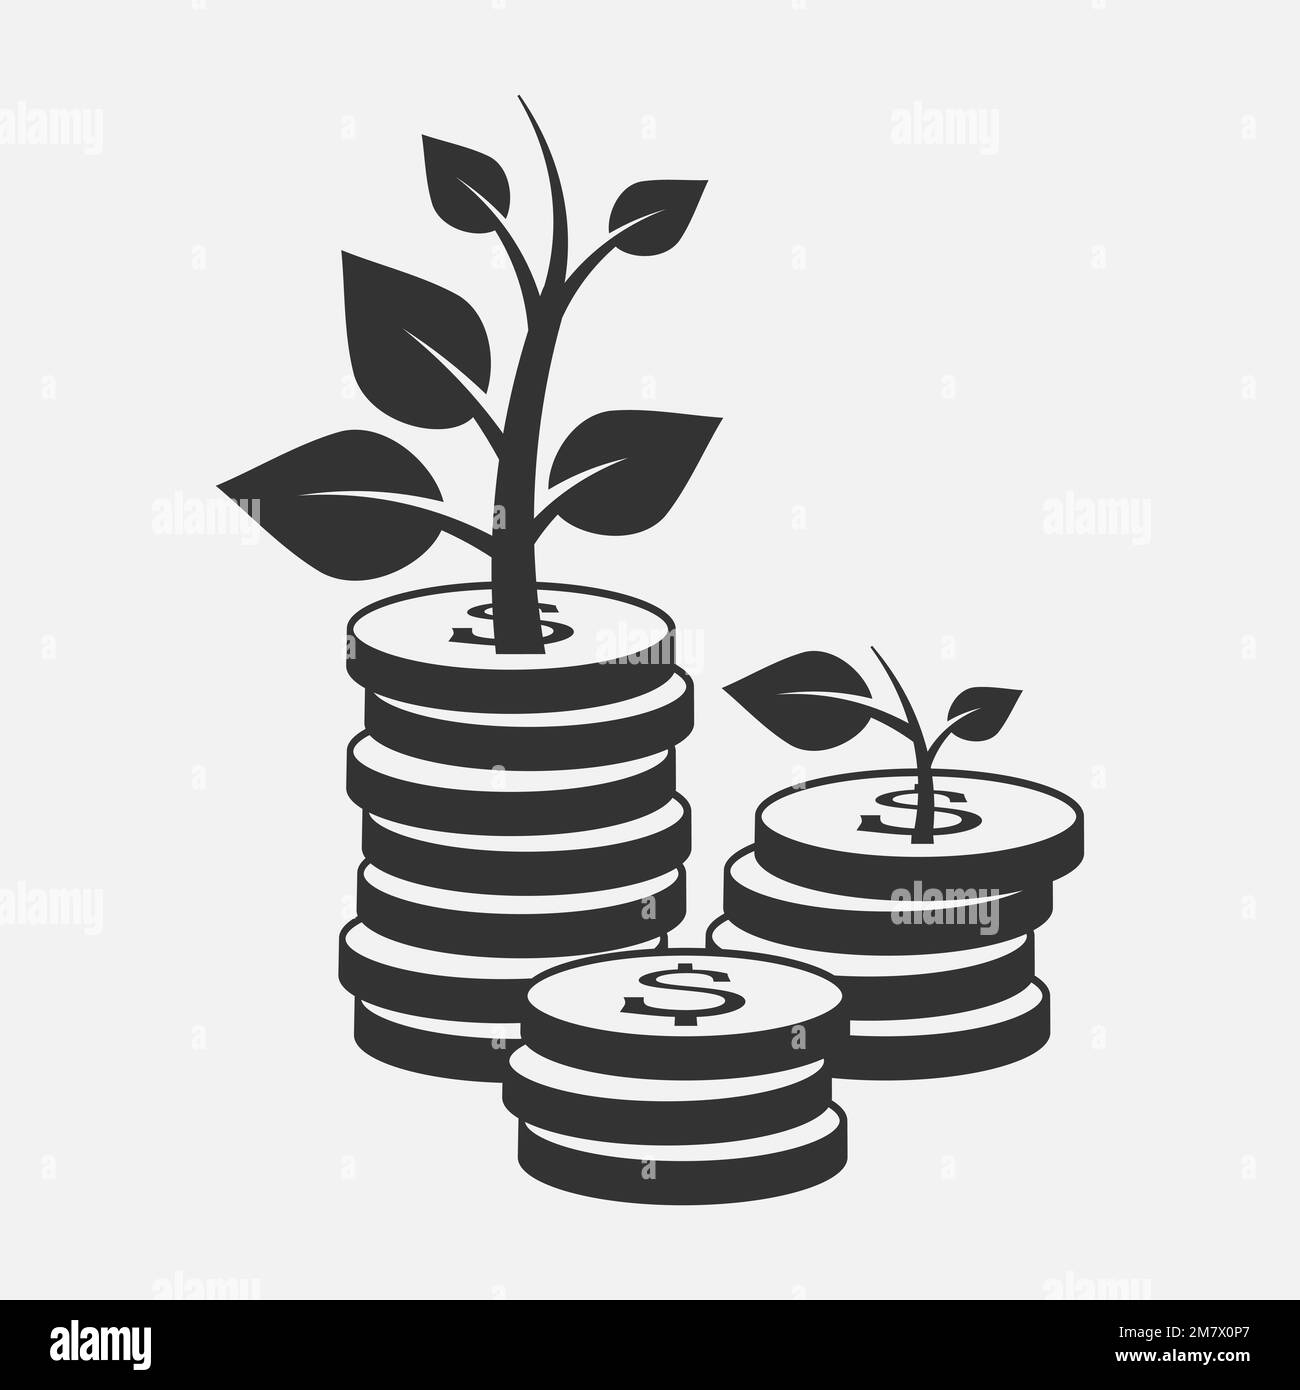 Money plant growth icon. Vector illustration. Eps 10 Stock Vector